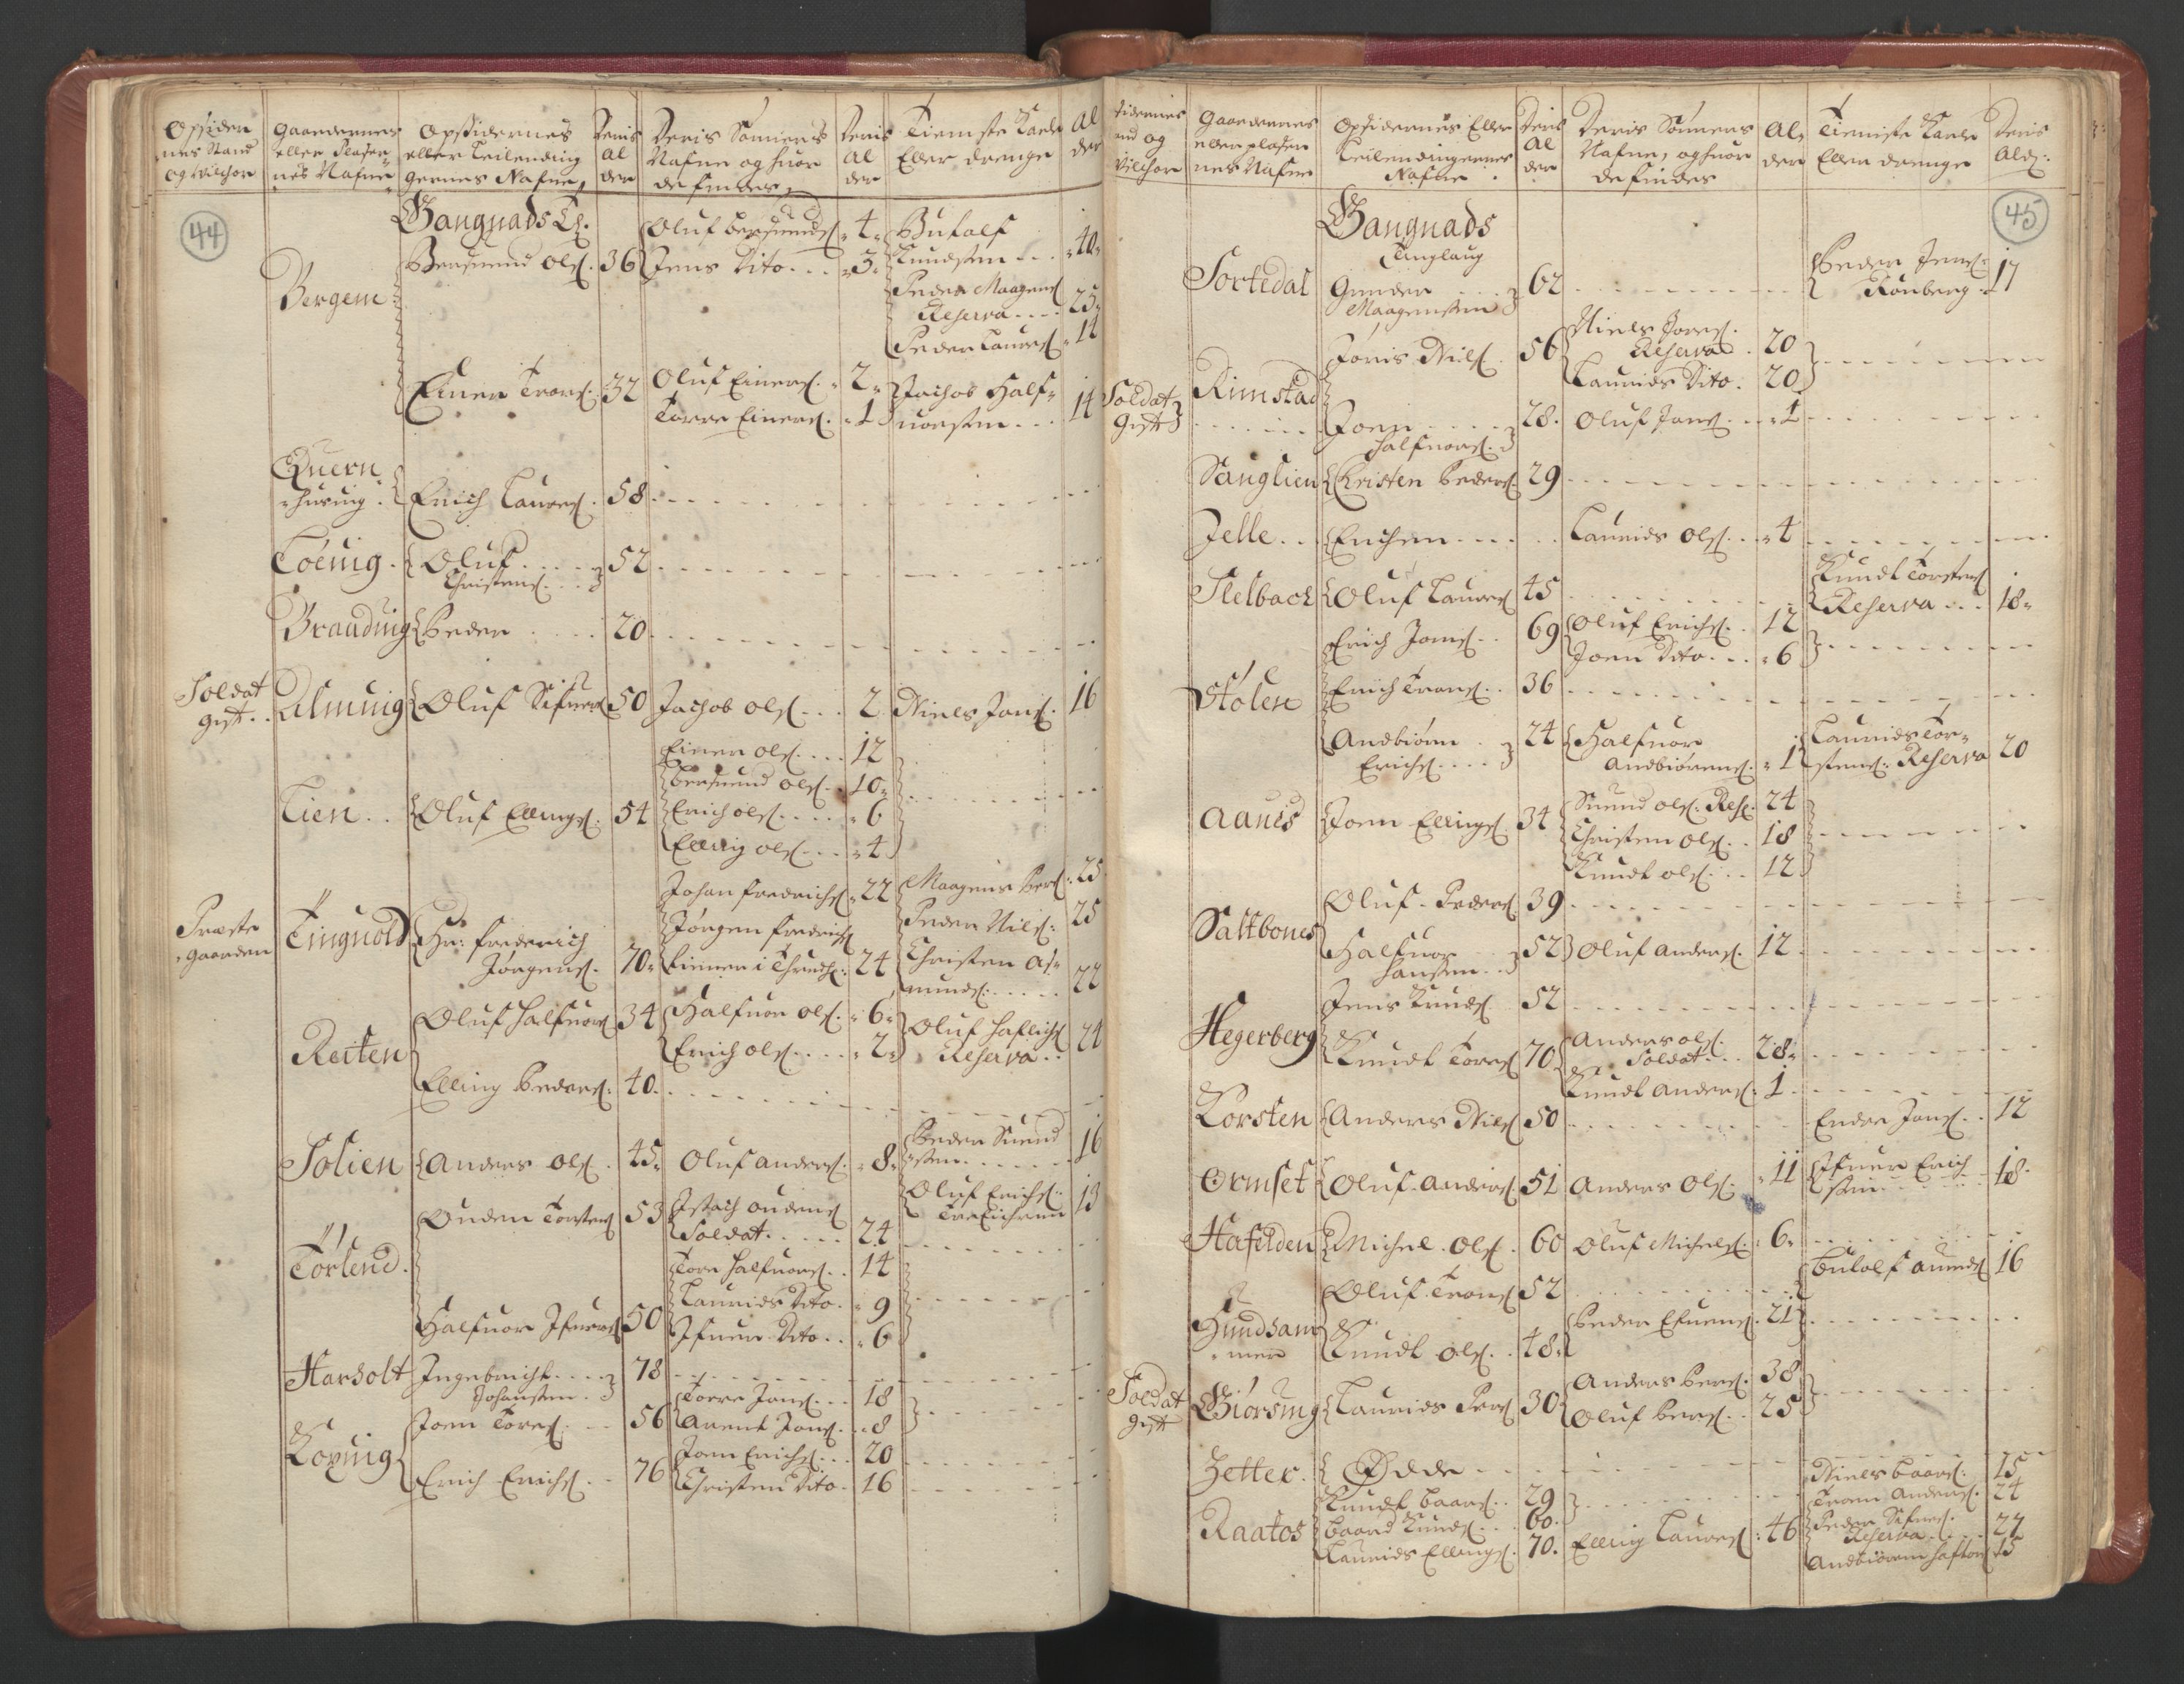 RA, Manntallet 1701, nr. 11: Nordmøre fogderi og Romsdal fogderi, 1701, s. 44-45